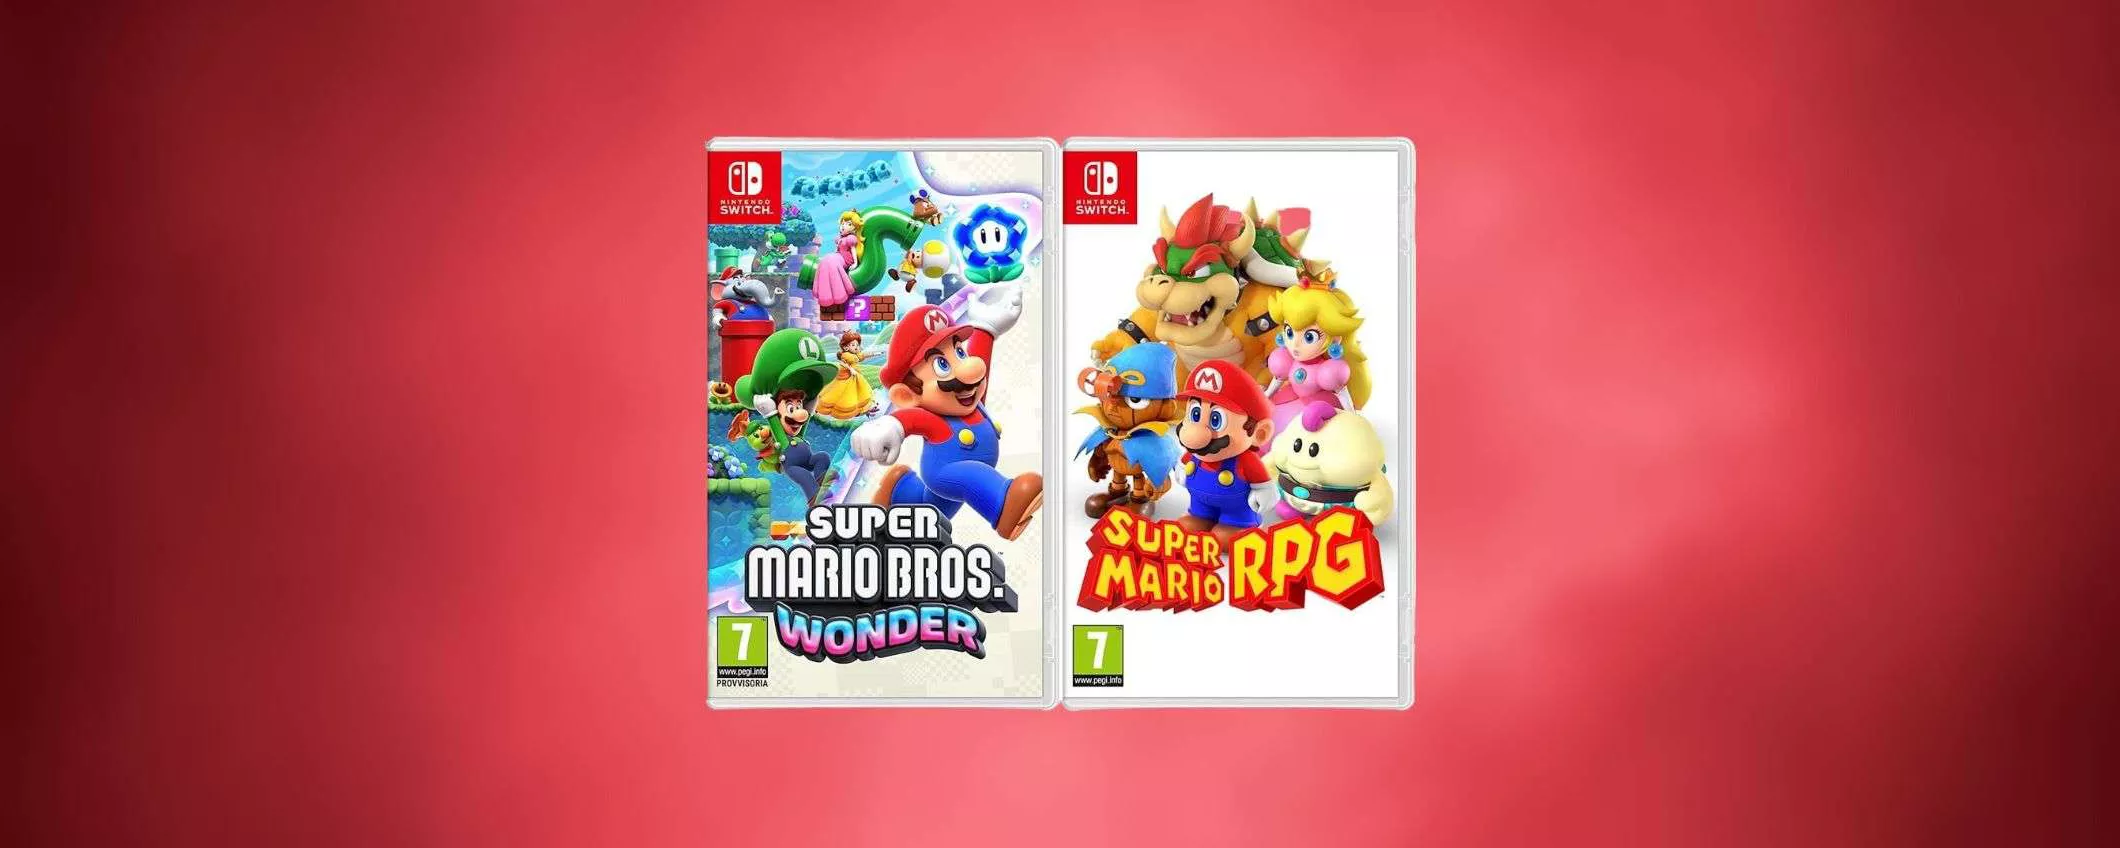 Super Mario RPG and Super Mario Bros Wonder Two Game Bundle